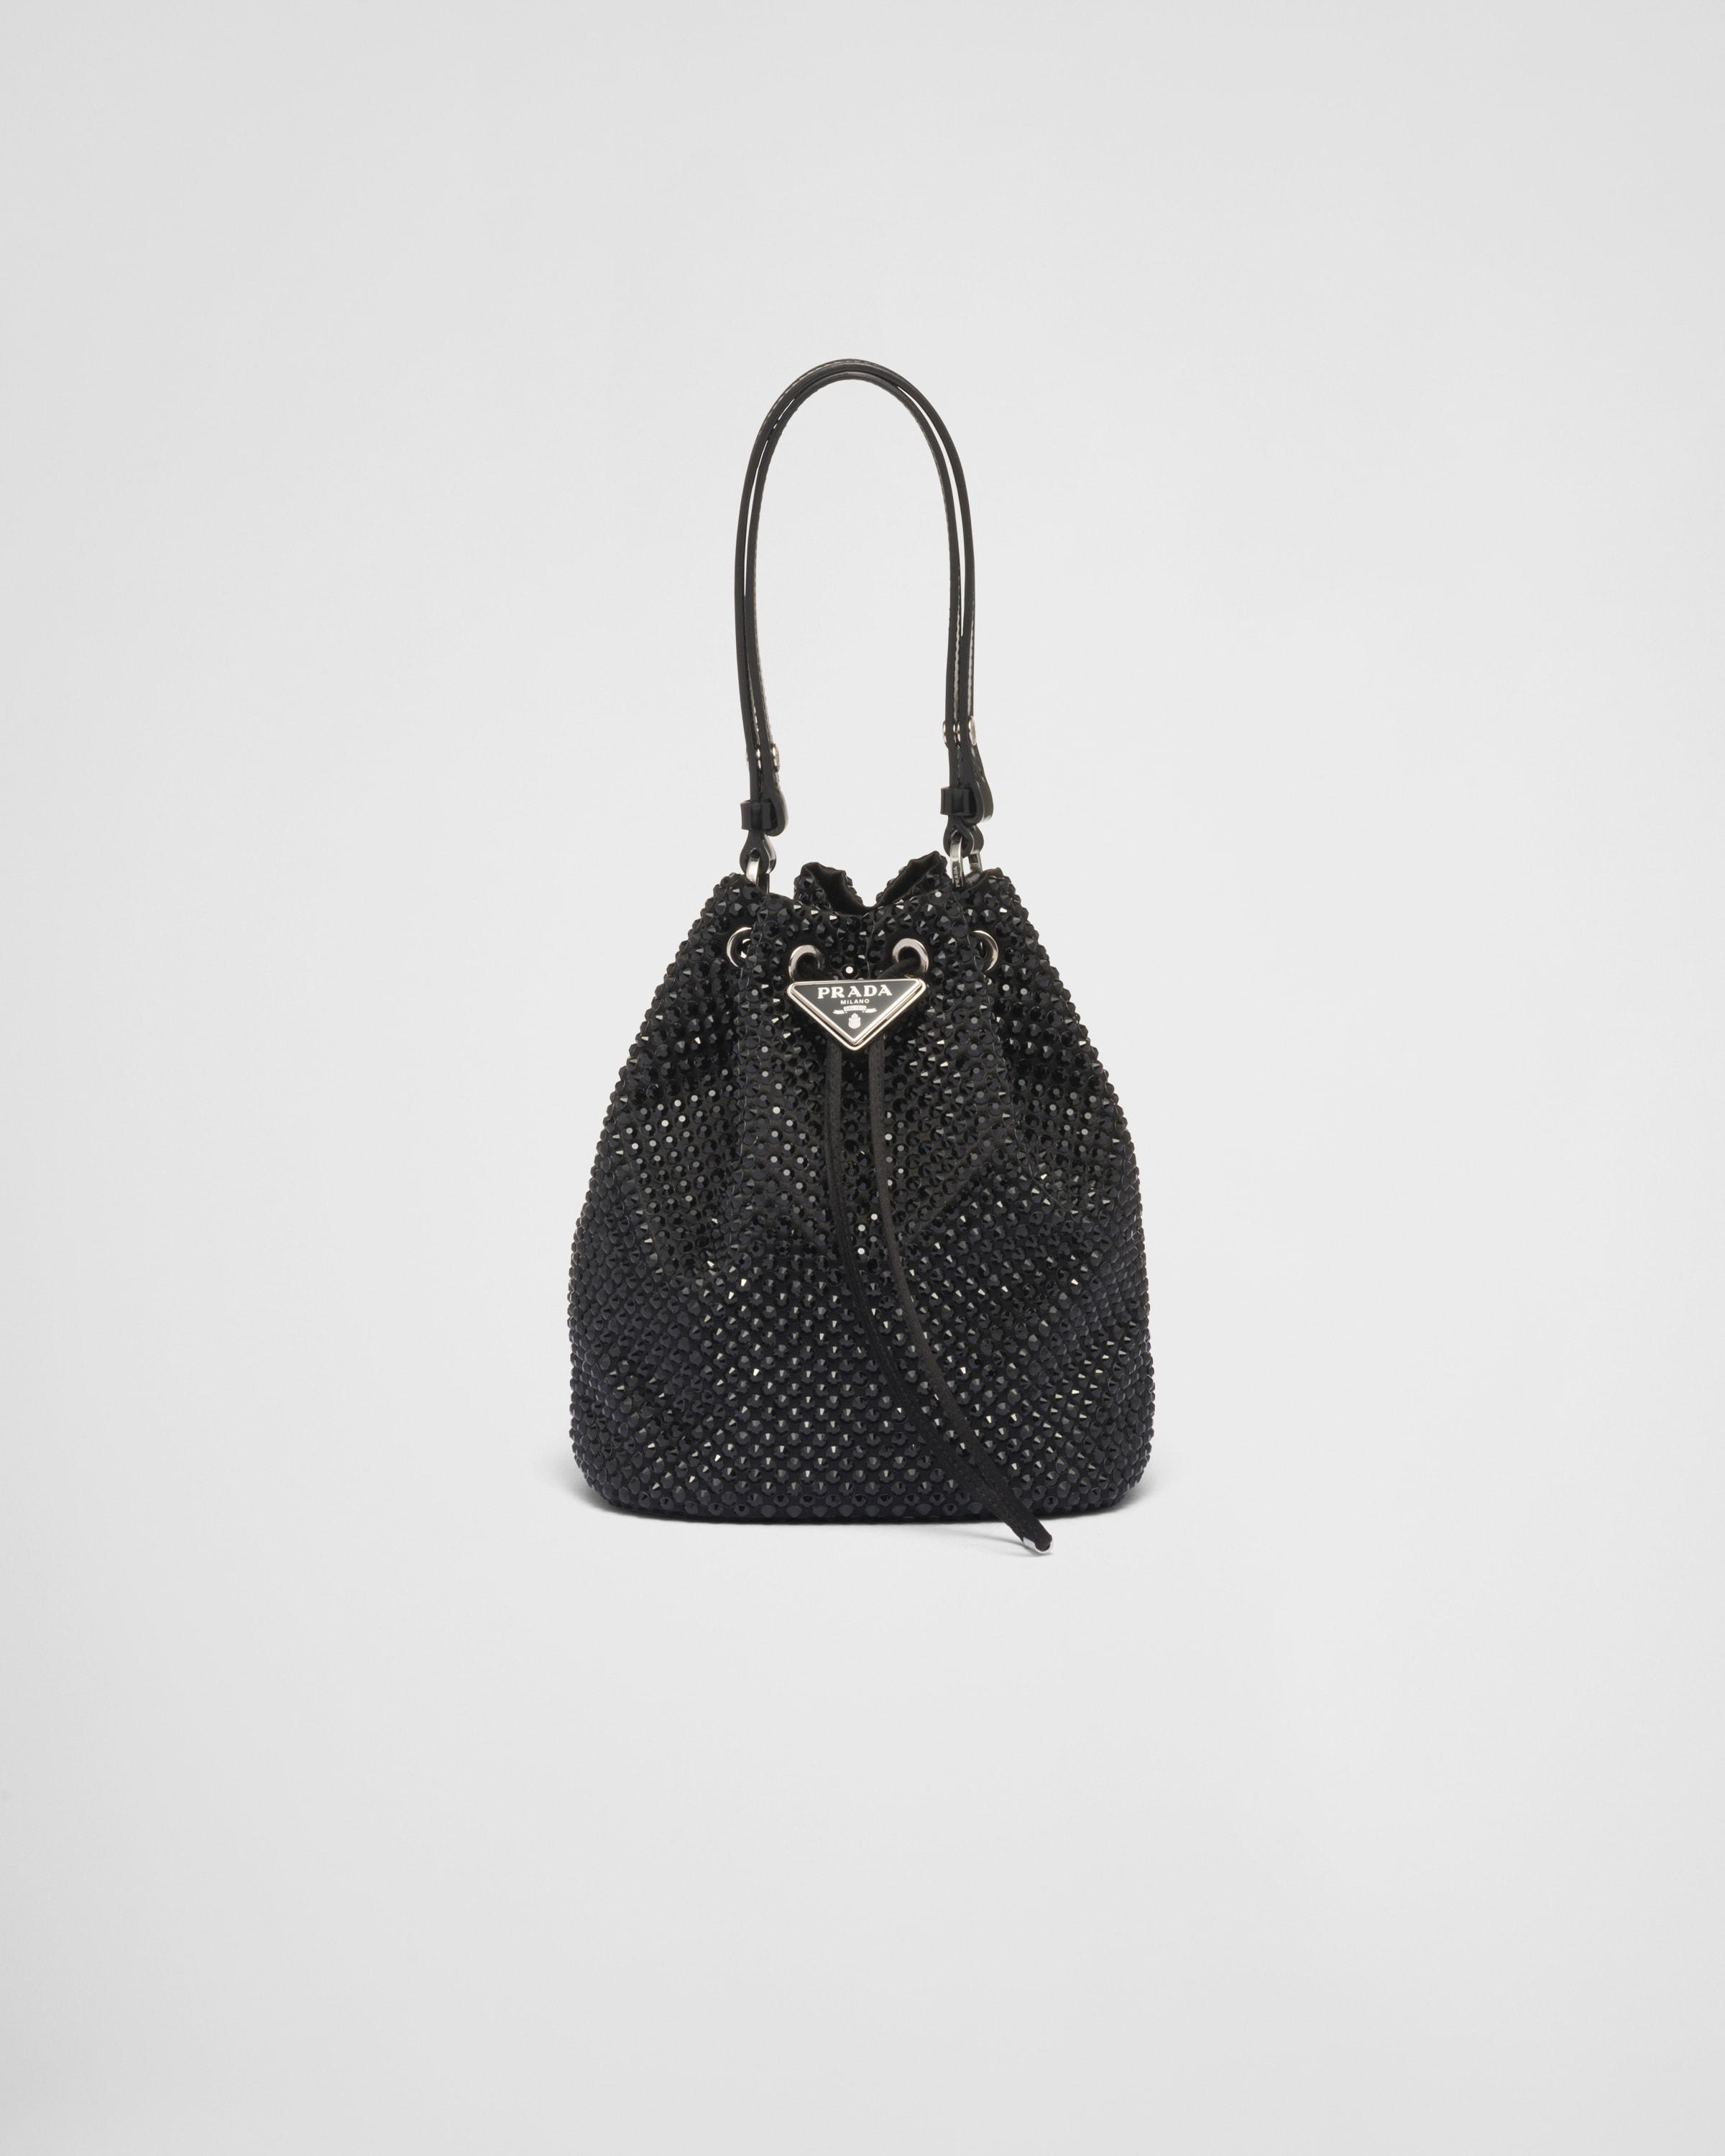 Prada Satin Bag With Crystals (Black)